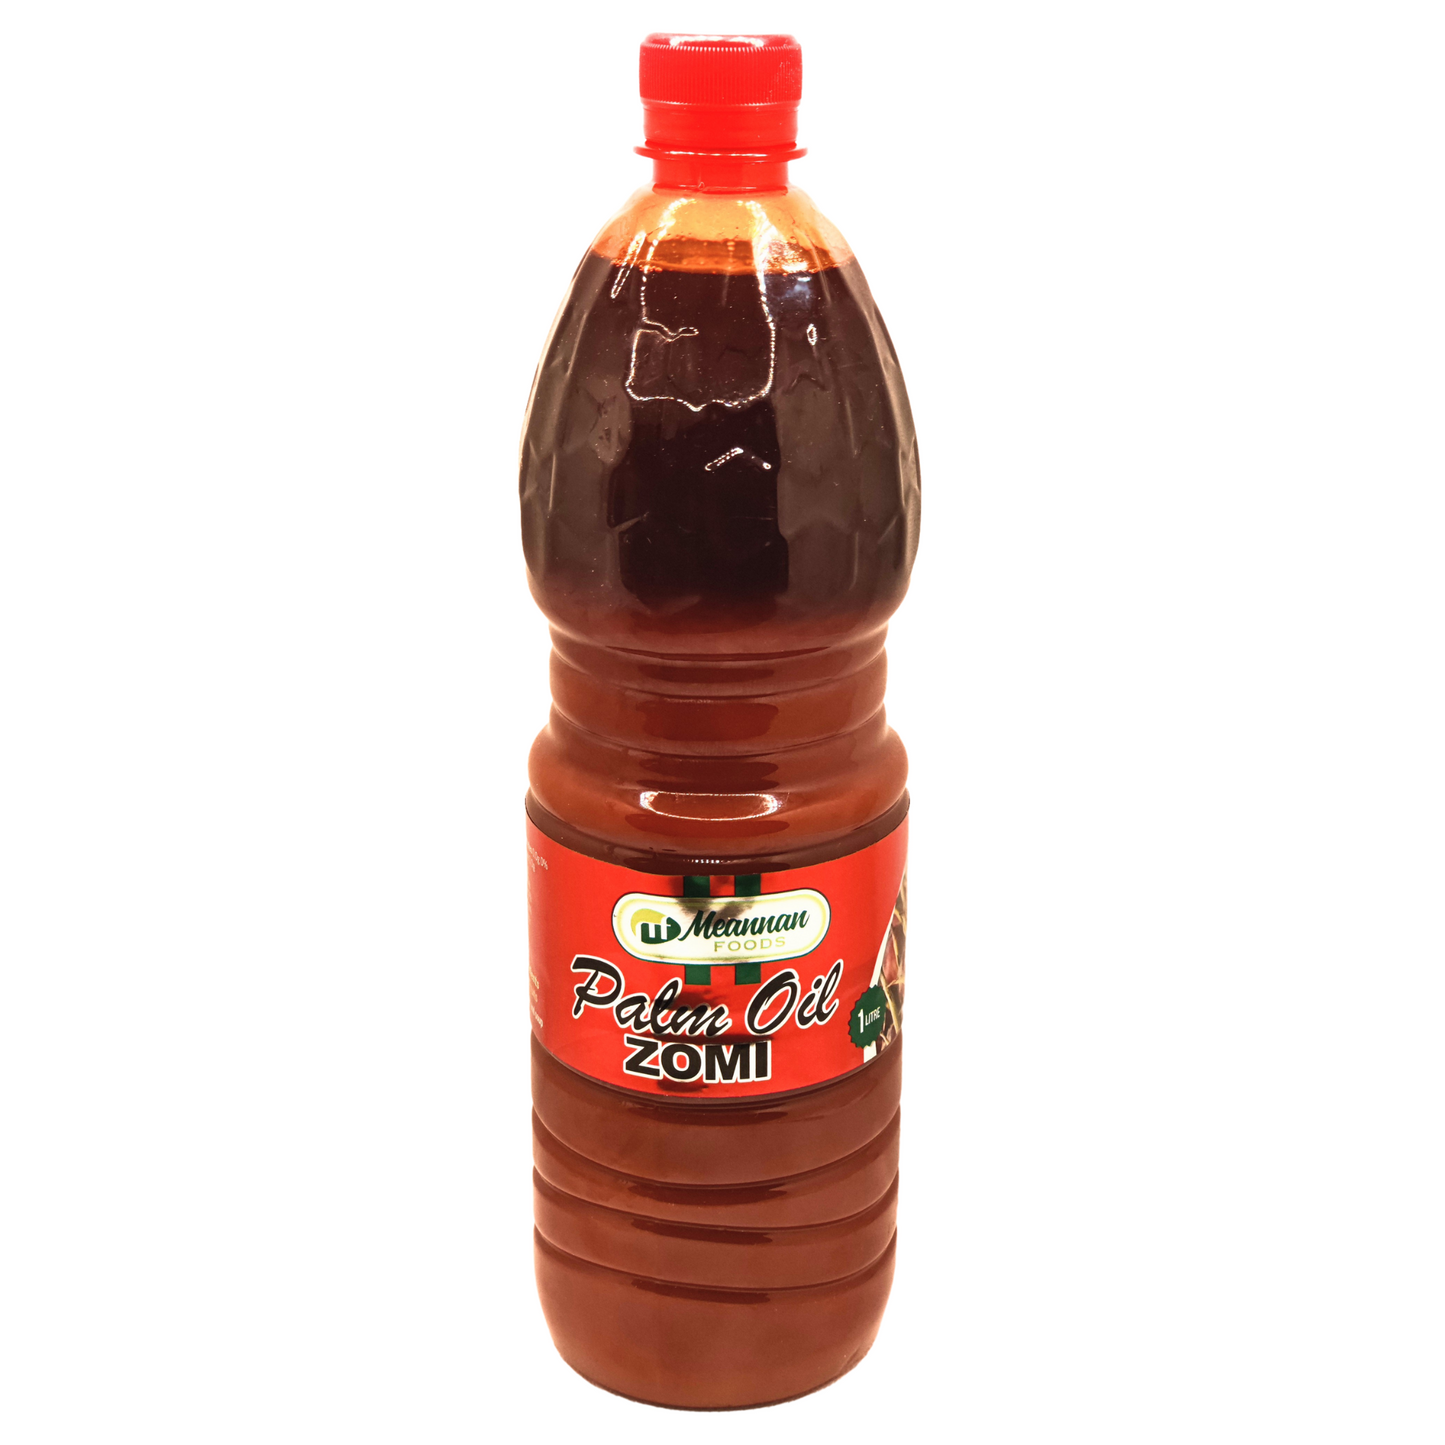 1 litre bottle of meannan palm oil zomi